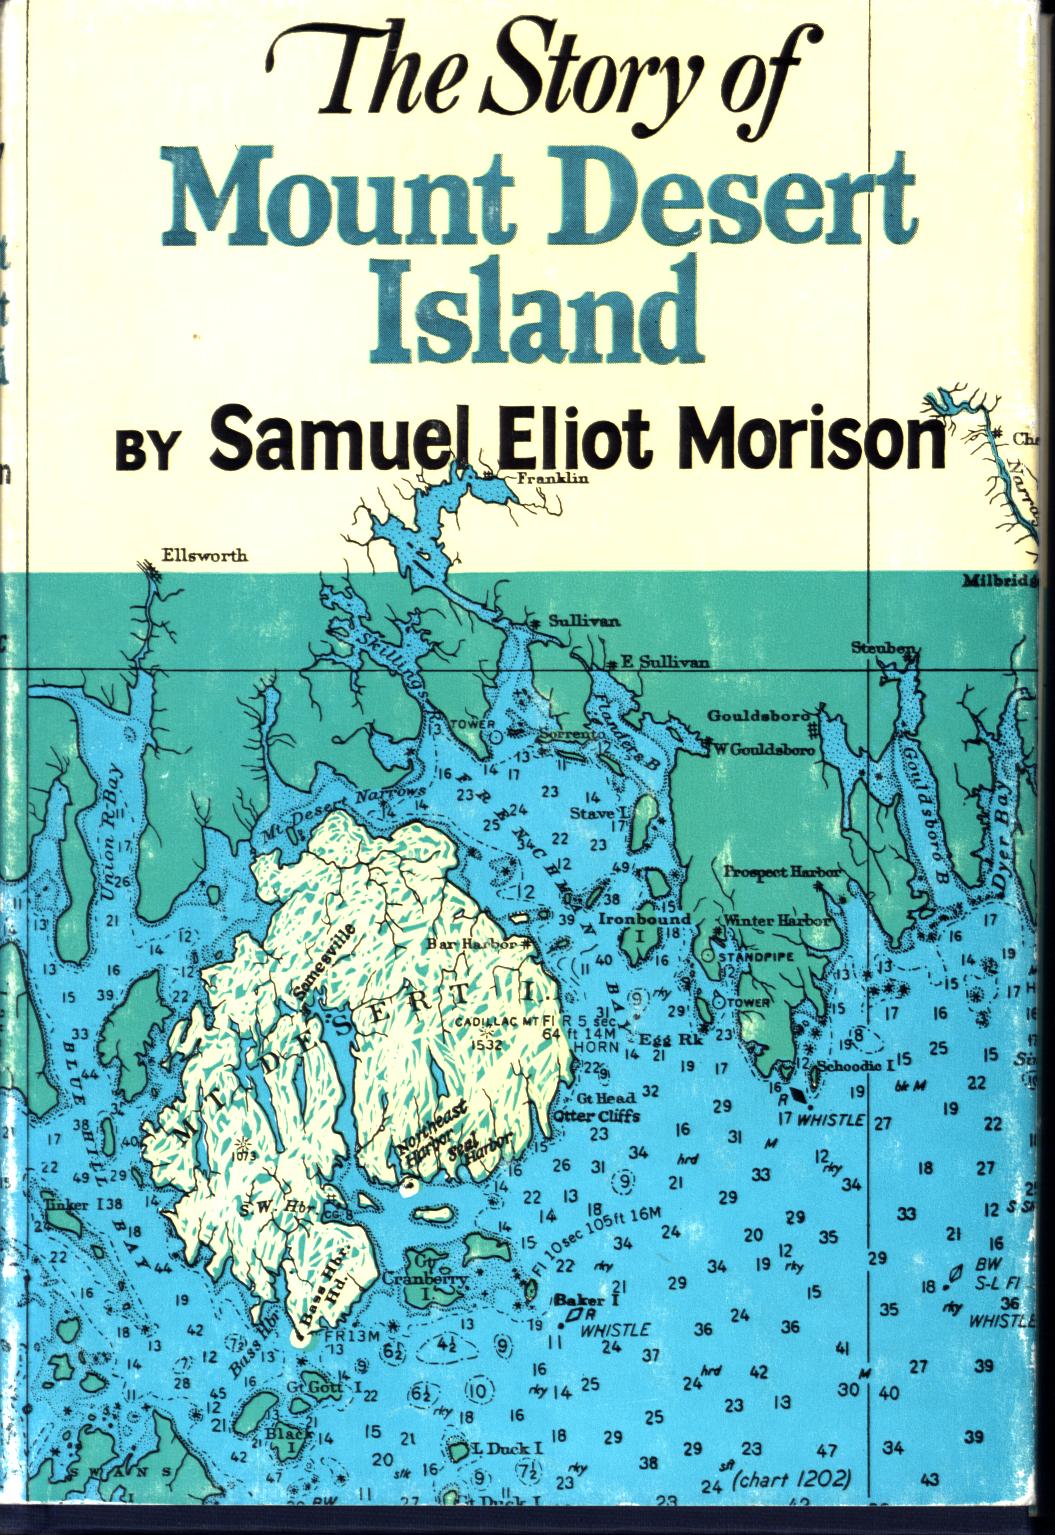 THE STORY OF MOUNT DESERT ISLAND.